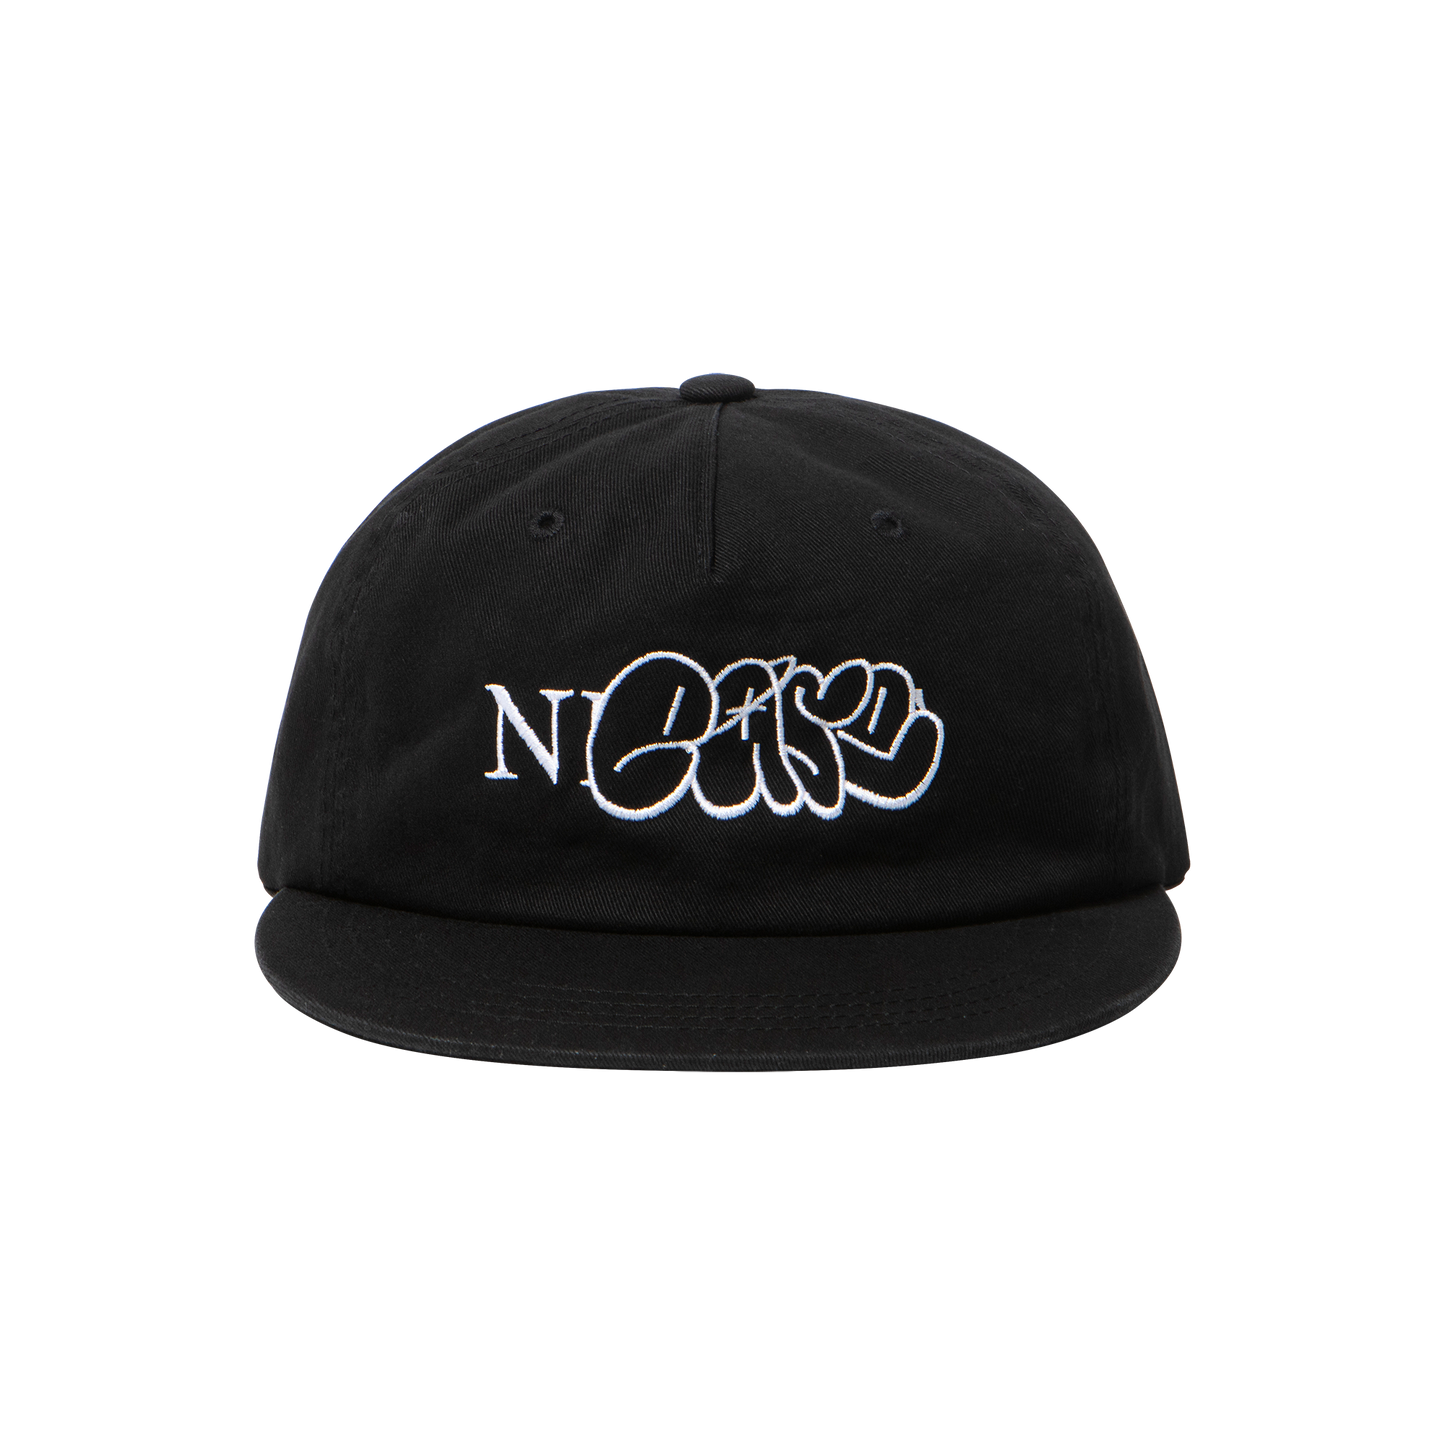 NEASE Bubble graffiti logo hat (black)